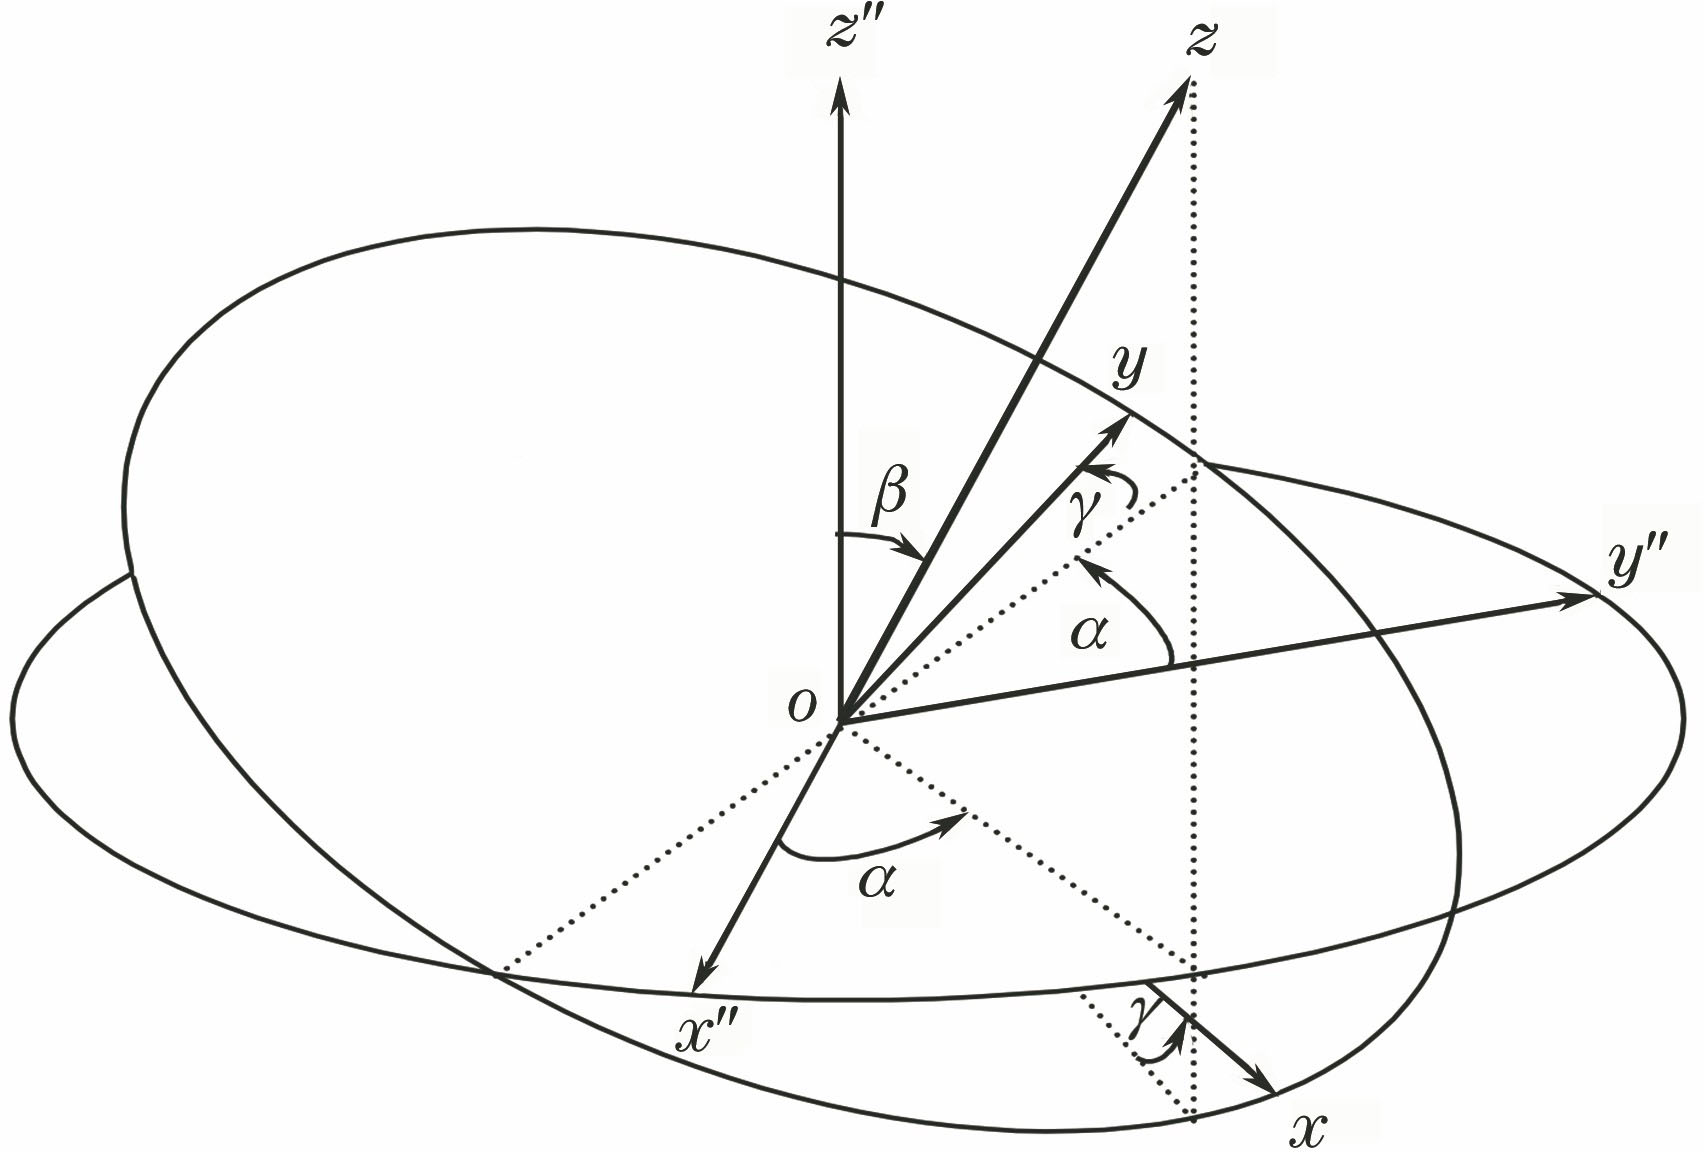 Rotation relationship between arbitrary rectangular coordinate systems